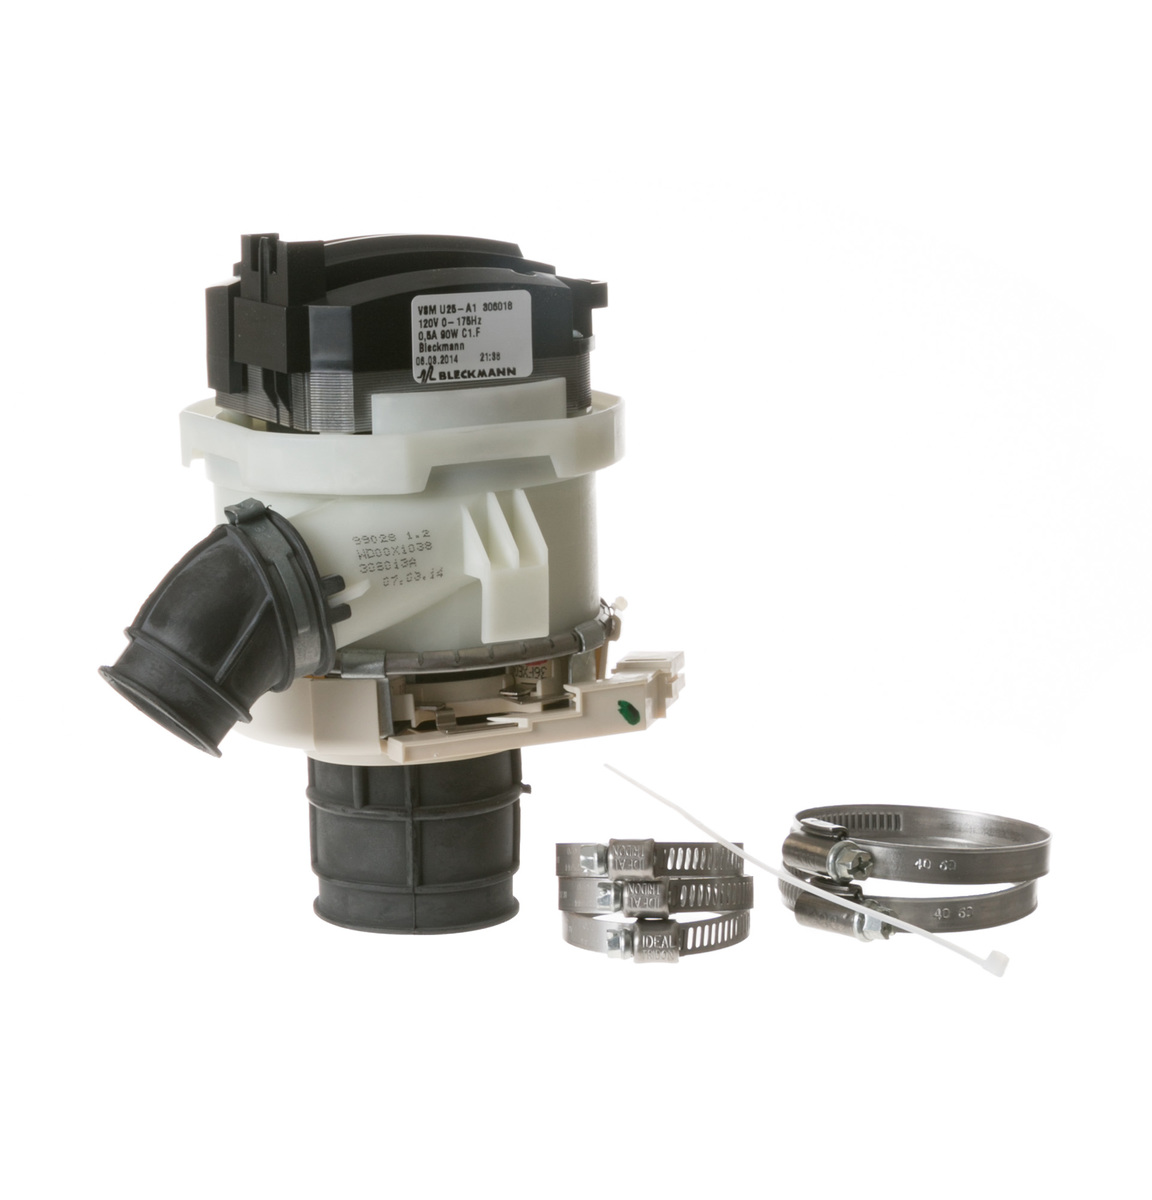 GE Dishwasher Variable Speed Pump Kit. Part #WG04A01811